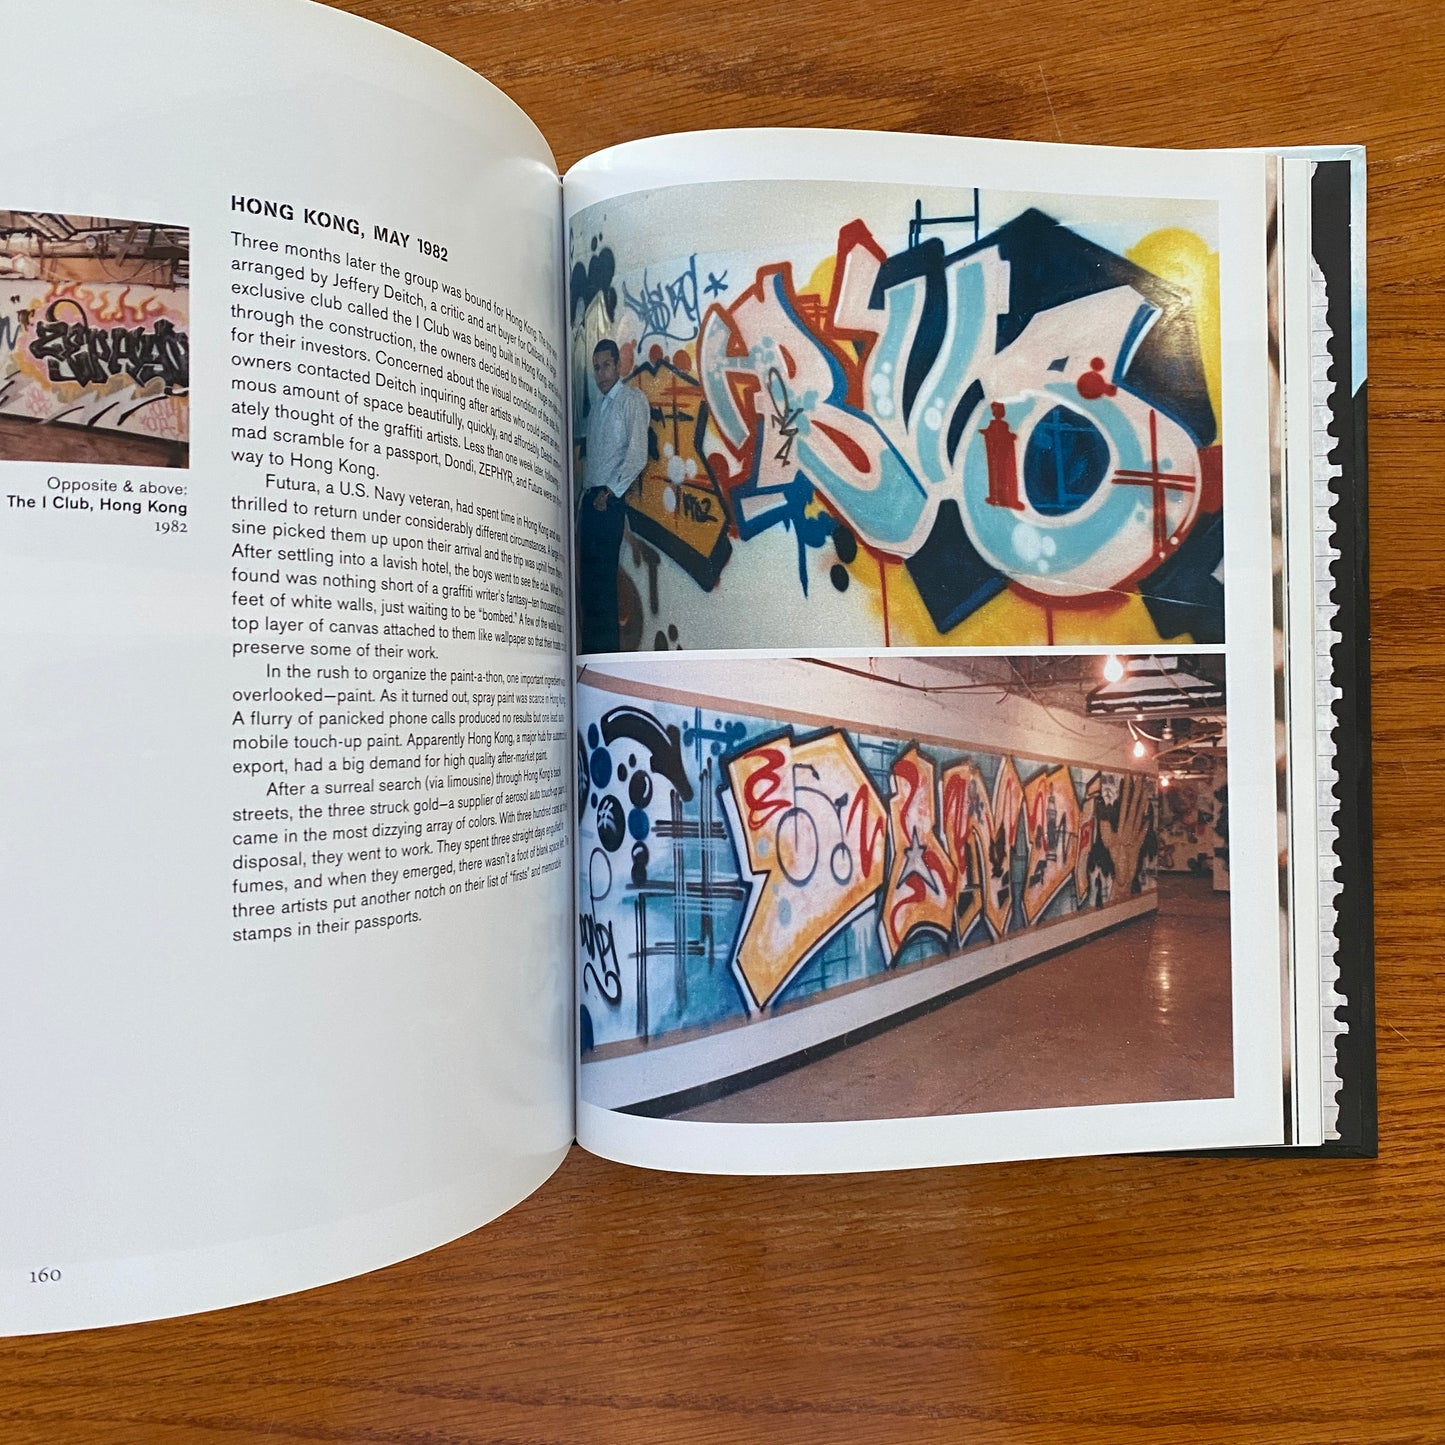 Dondi White Style Master General: The Life of Graffiti Artist Dondi White